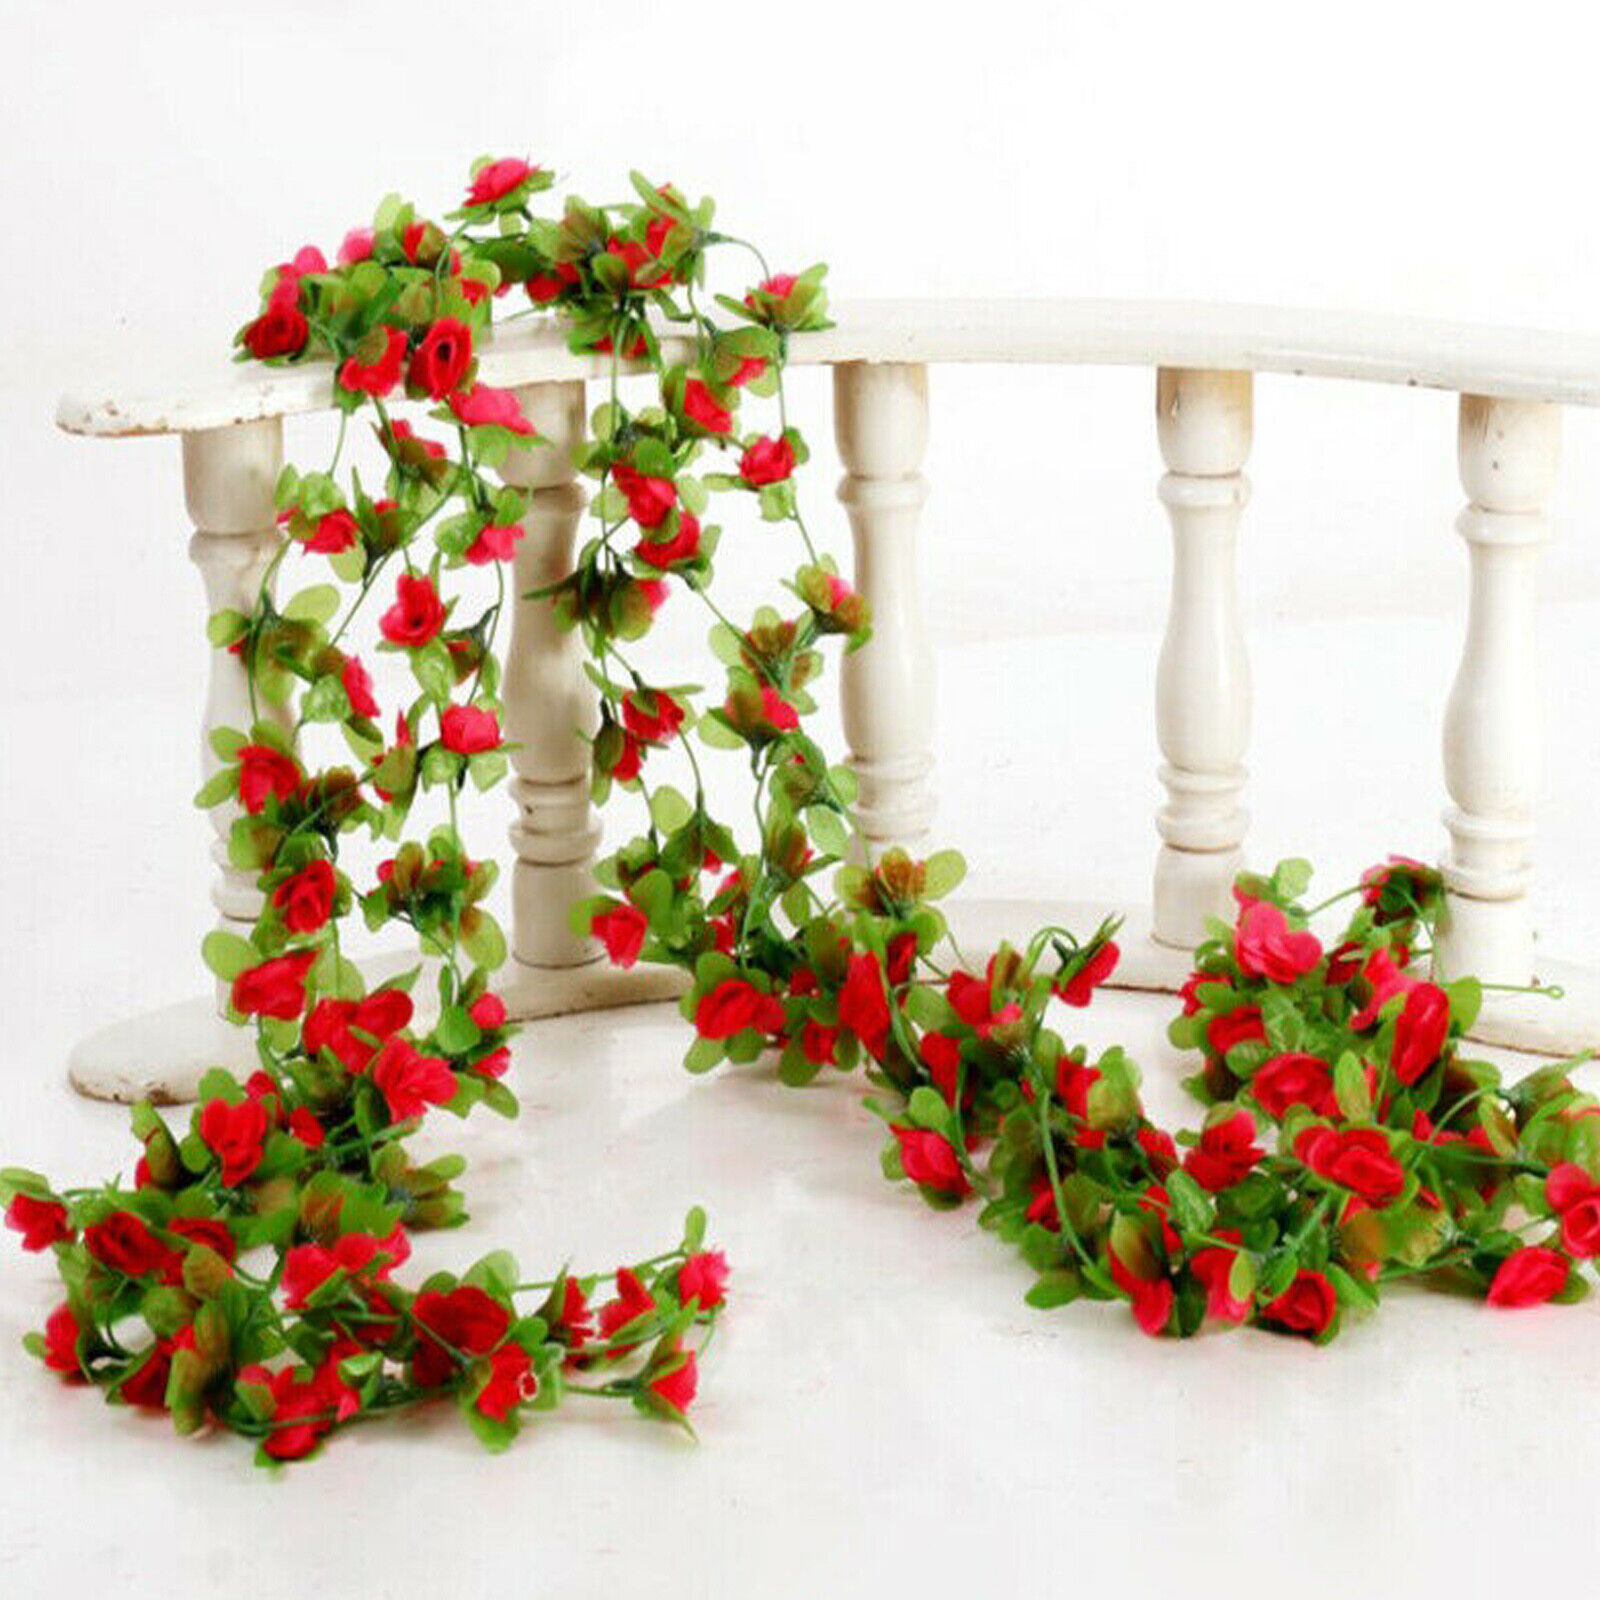 Red Artificial Flowers 7ft Strings 40 Heads Artificial Flower Silk Rose Leaf Garland Vine Ivy Home Wedding Garden Decor